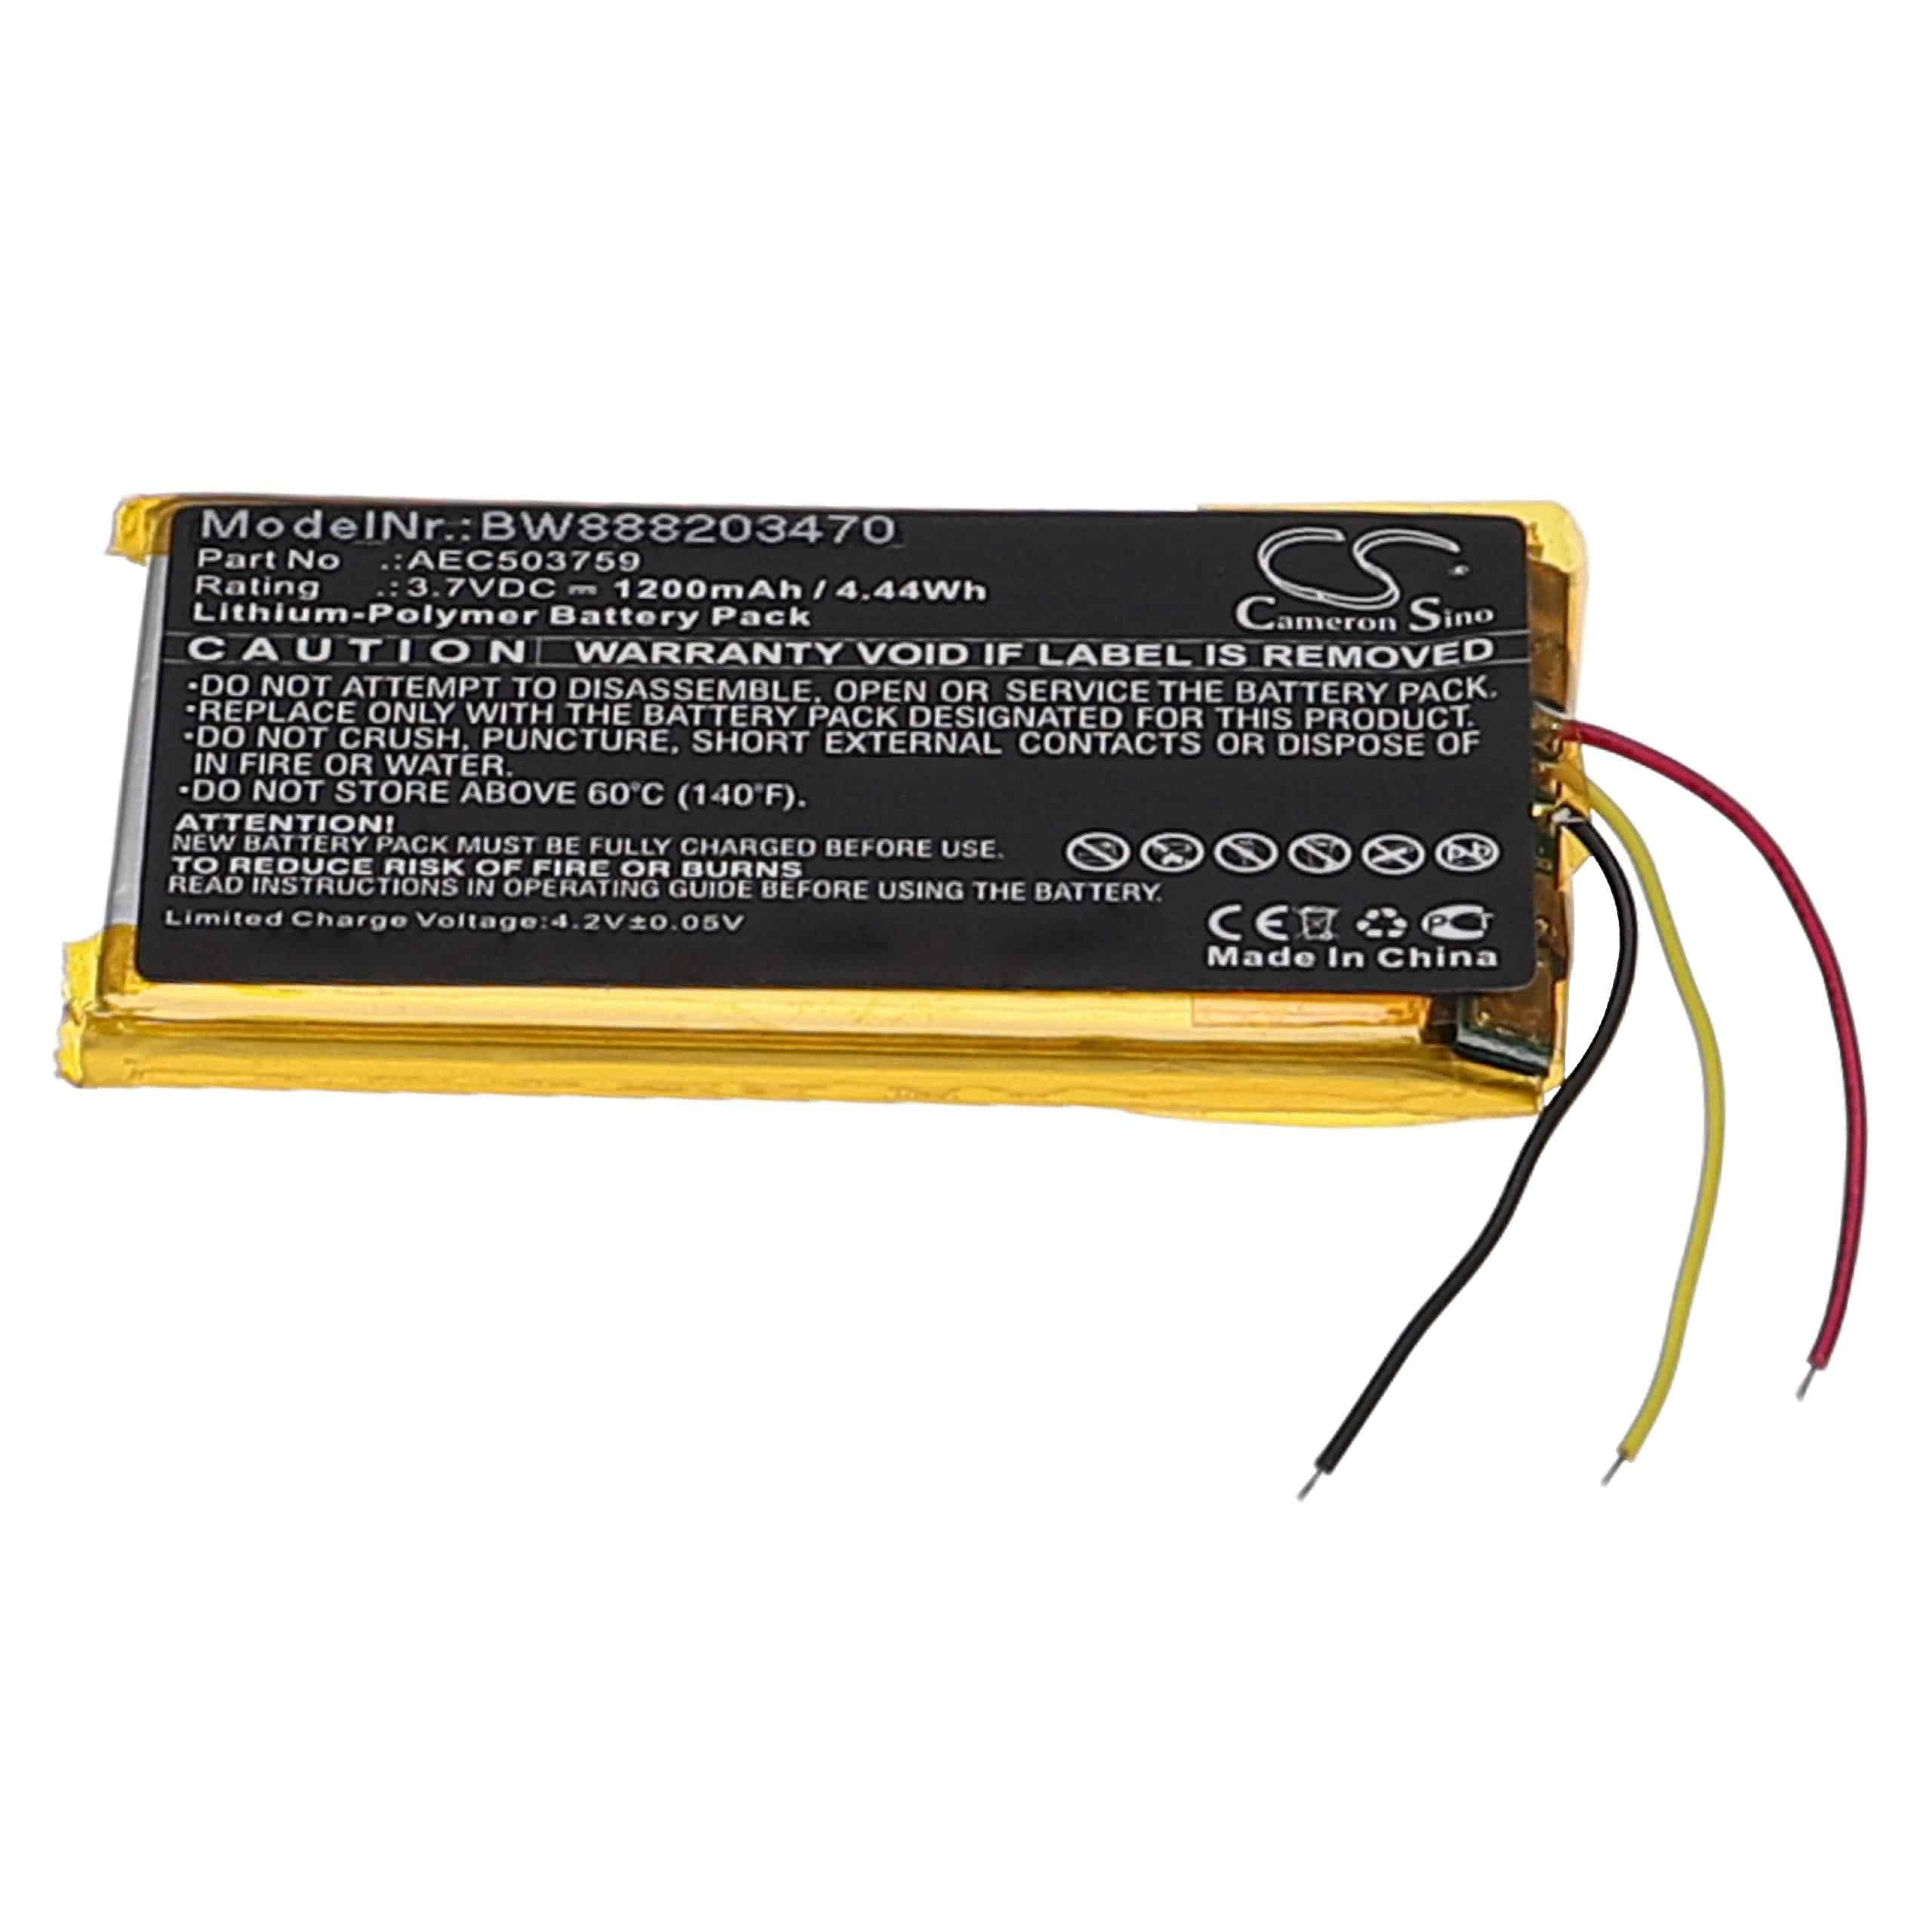 Batería reemplaza SteelSeries AEC503759 para auriculares SteelSeries - 1200 mAh 3,7 V Li-poli